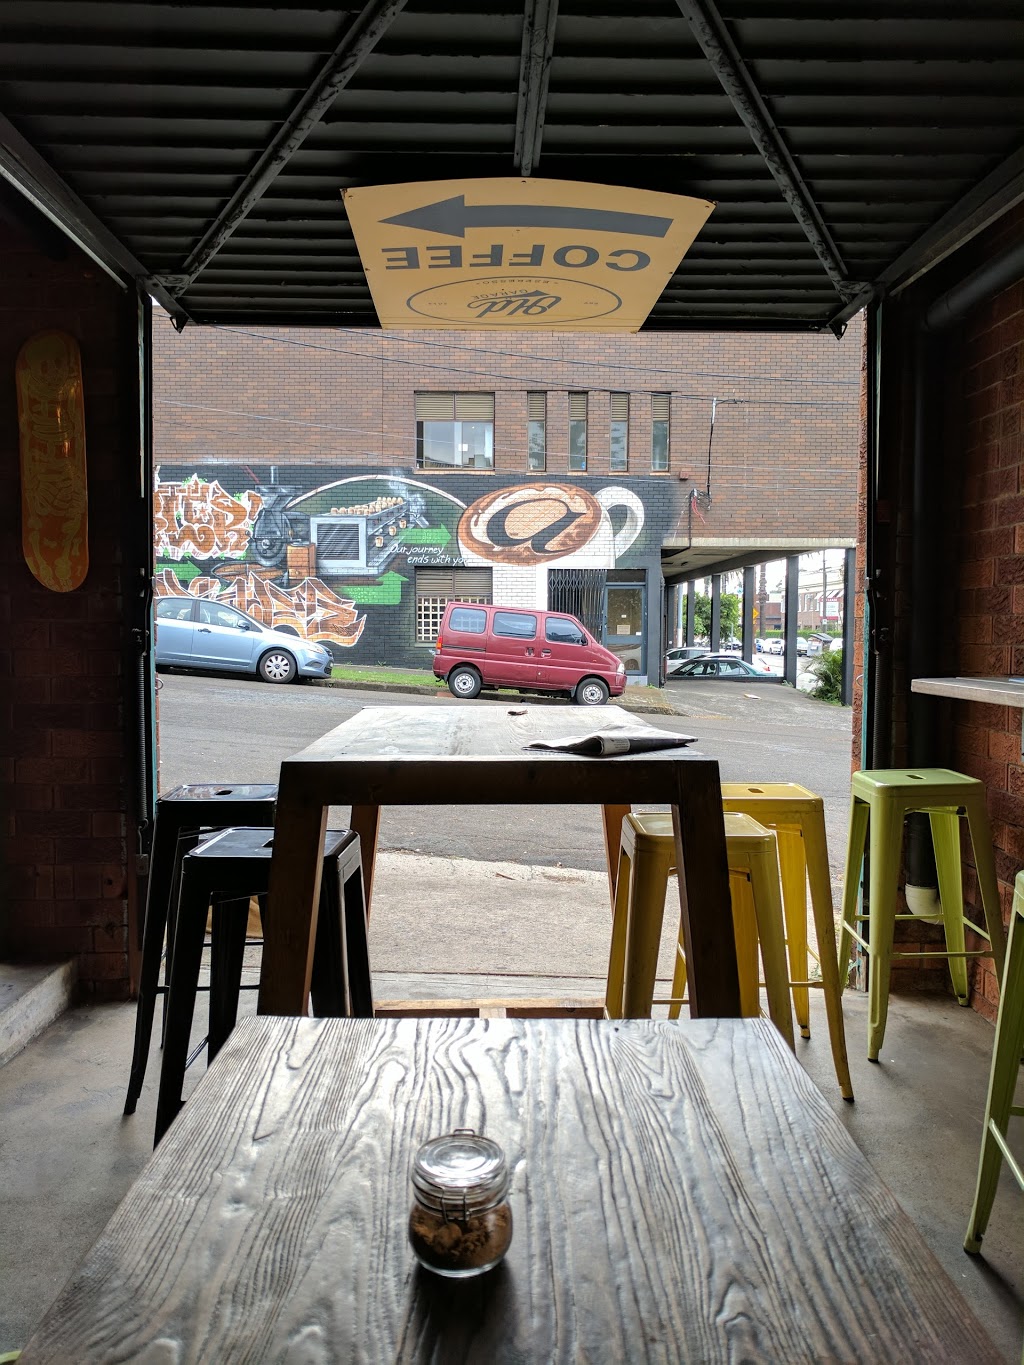 Old Garage Espresso | cafe | 3 Ruby St, Marrickville NSW 2204, Australia